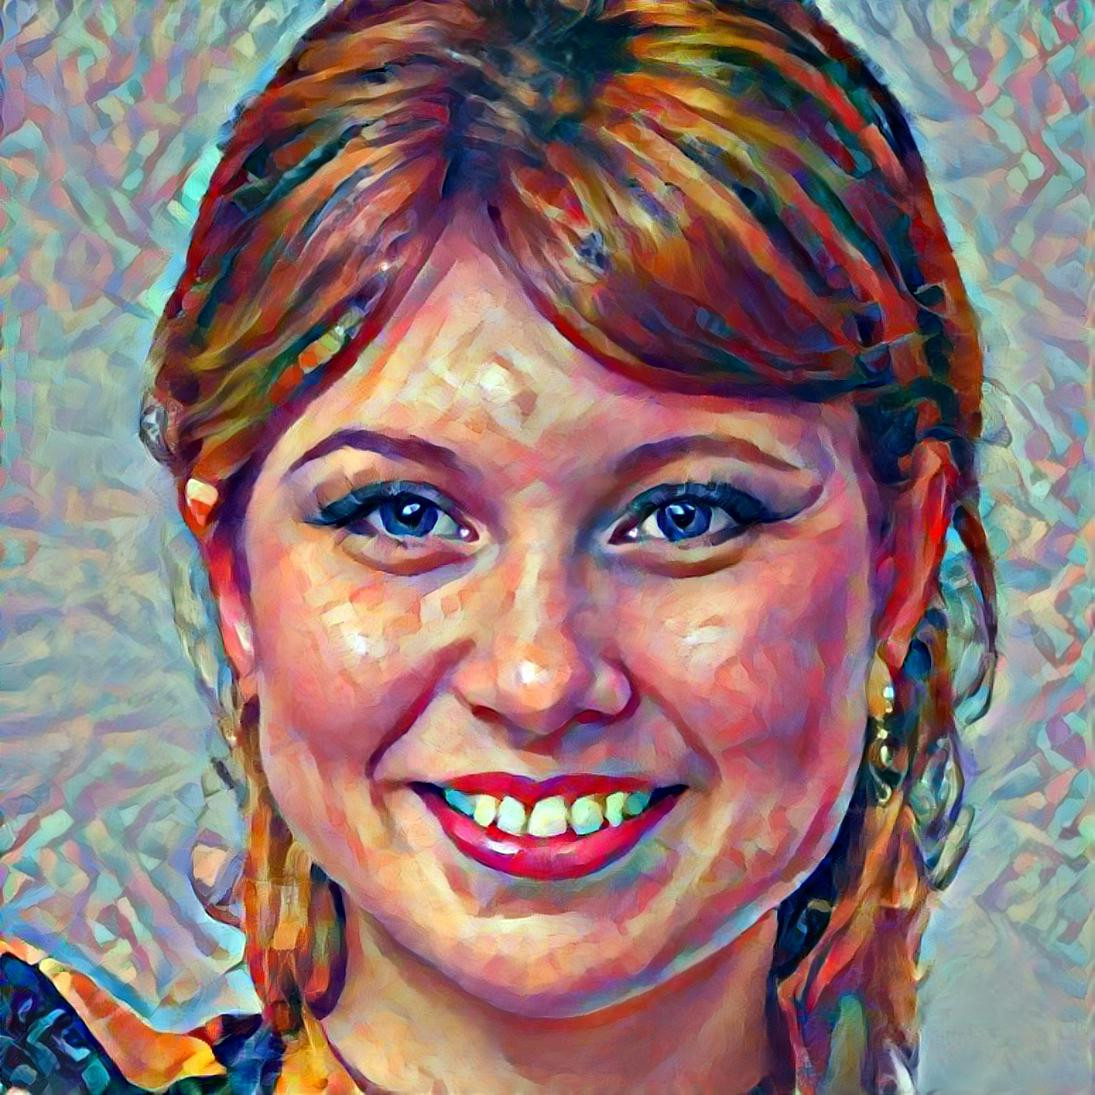 Face created using neural network: https://www.artbreeder.com/taaplari